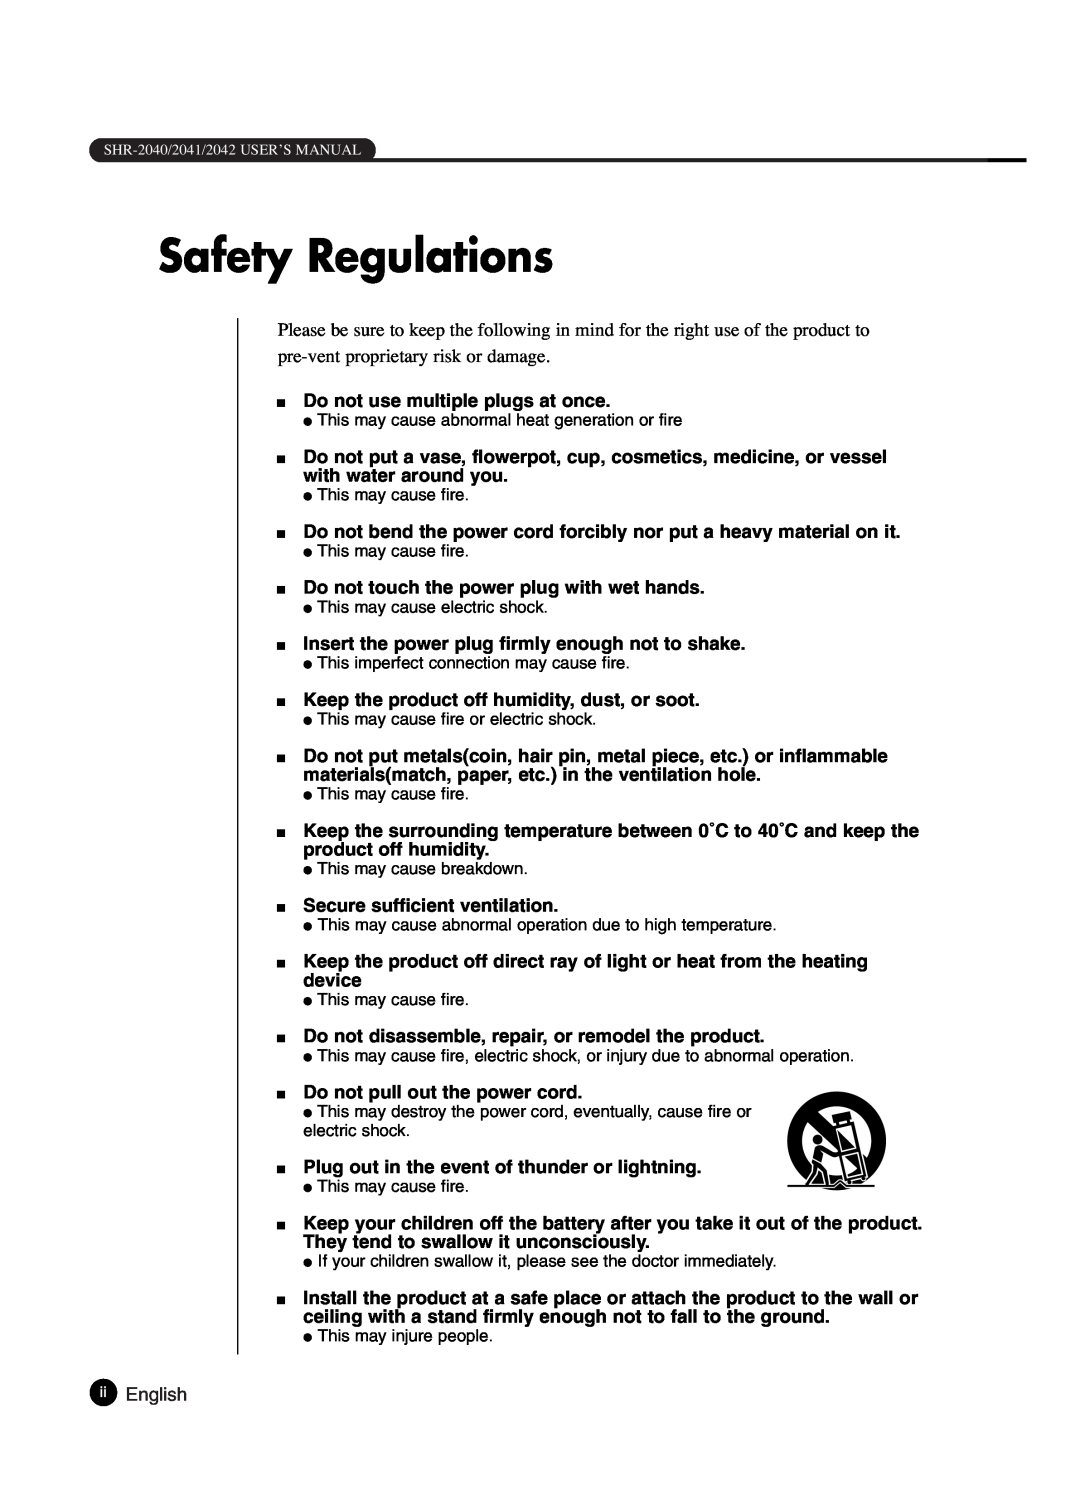 Samsung SHR-2042P250, SHR-2040P250 manual Safety Regulations, ii English 